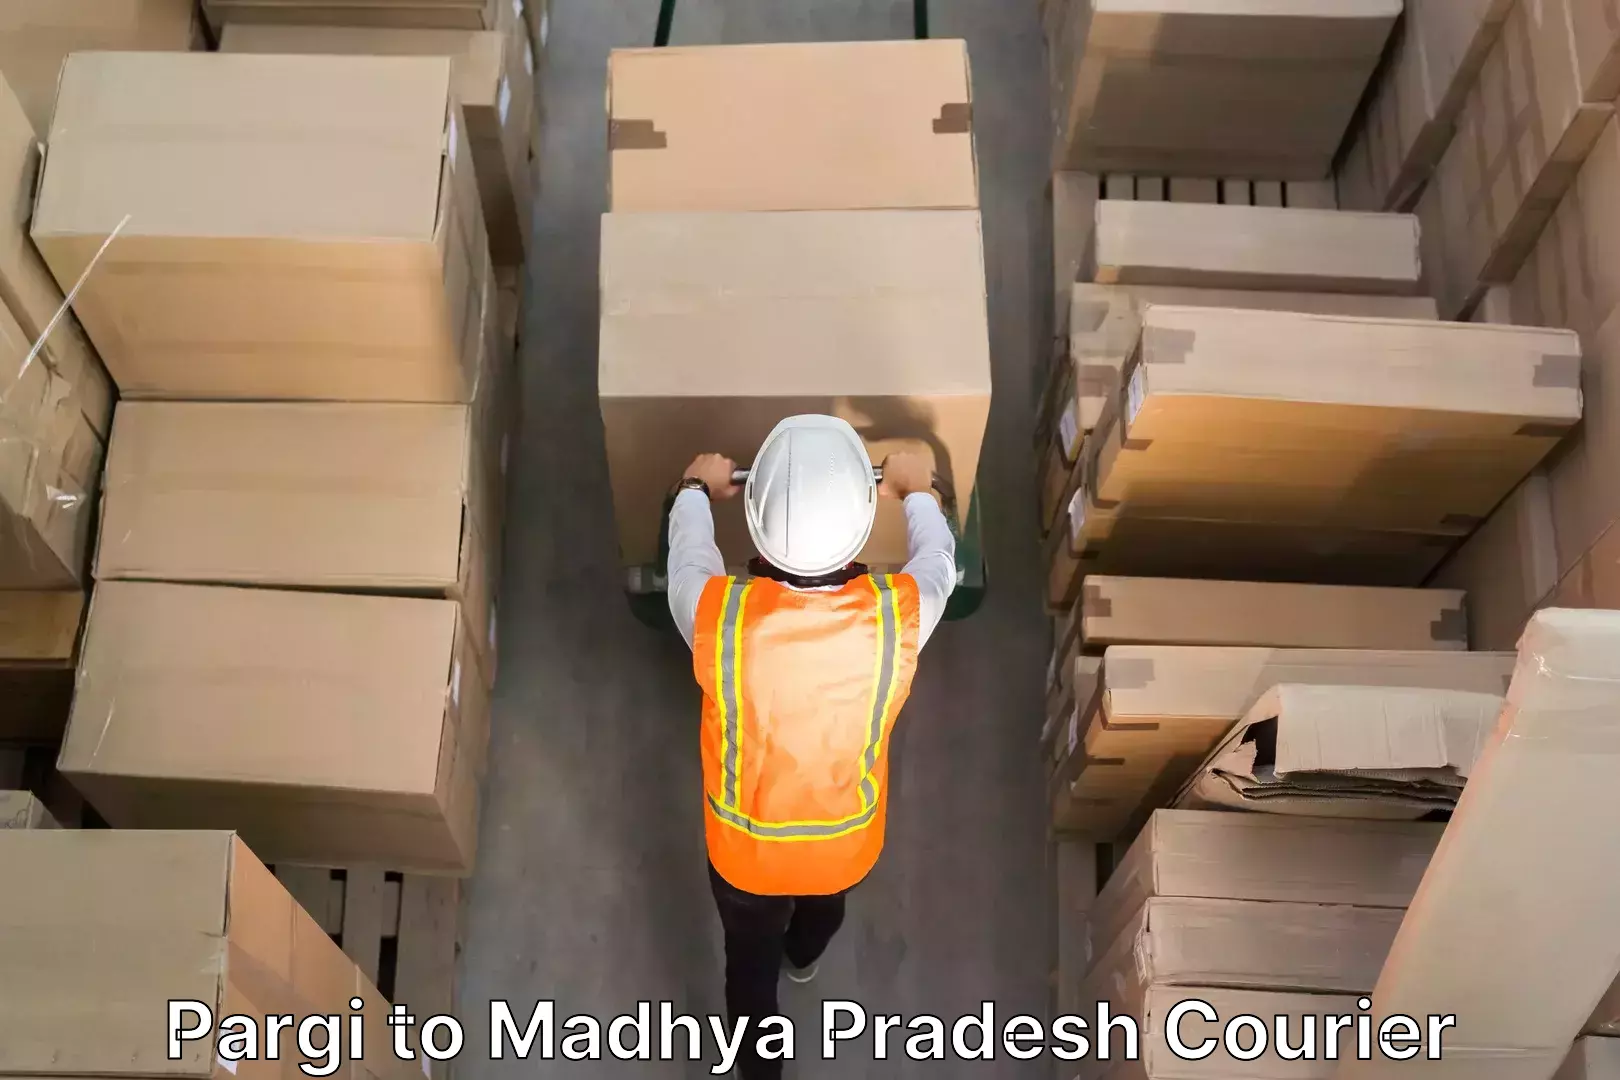 Furniture delivery service Pargi to Madhya Pradesh